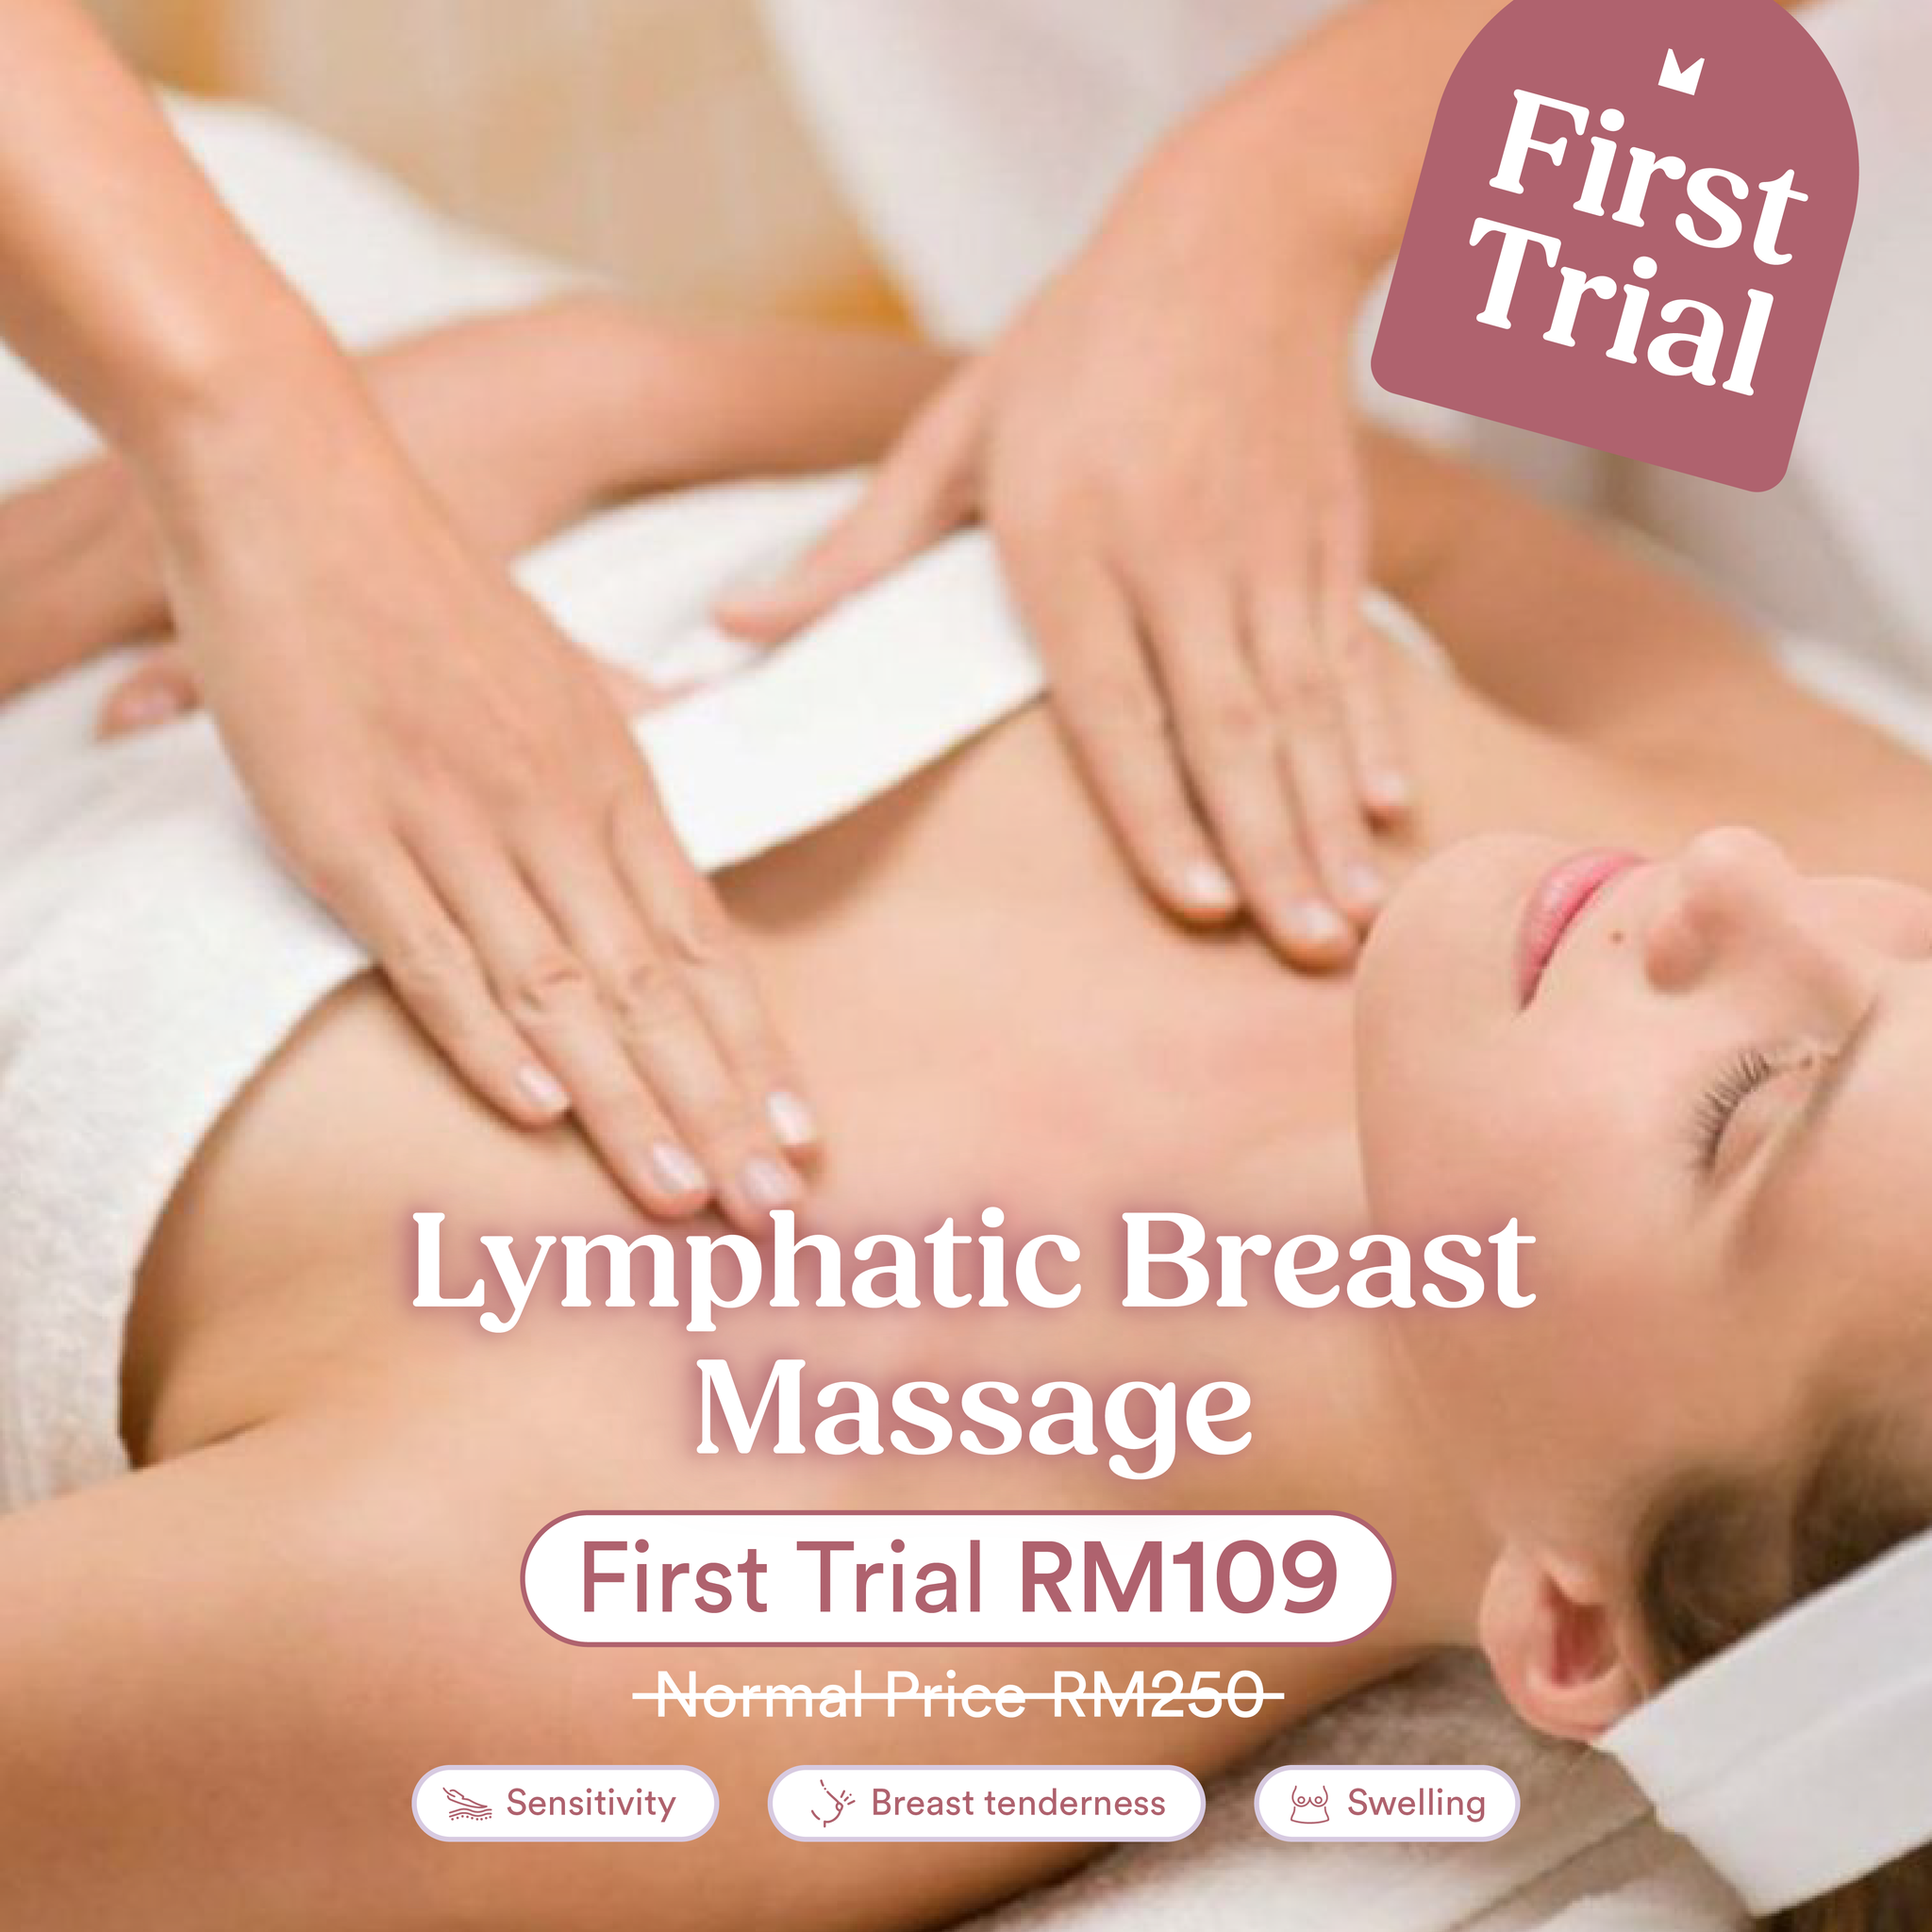 Lymphatic Breast Massage